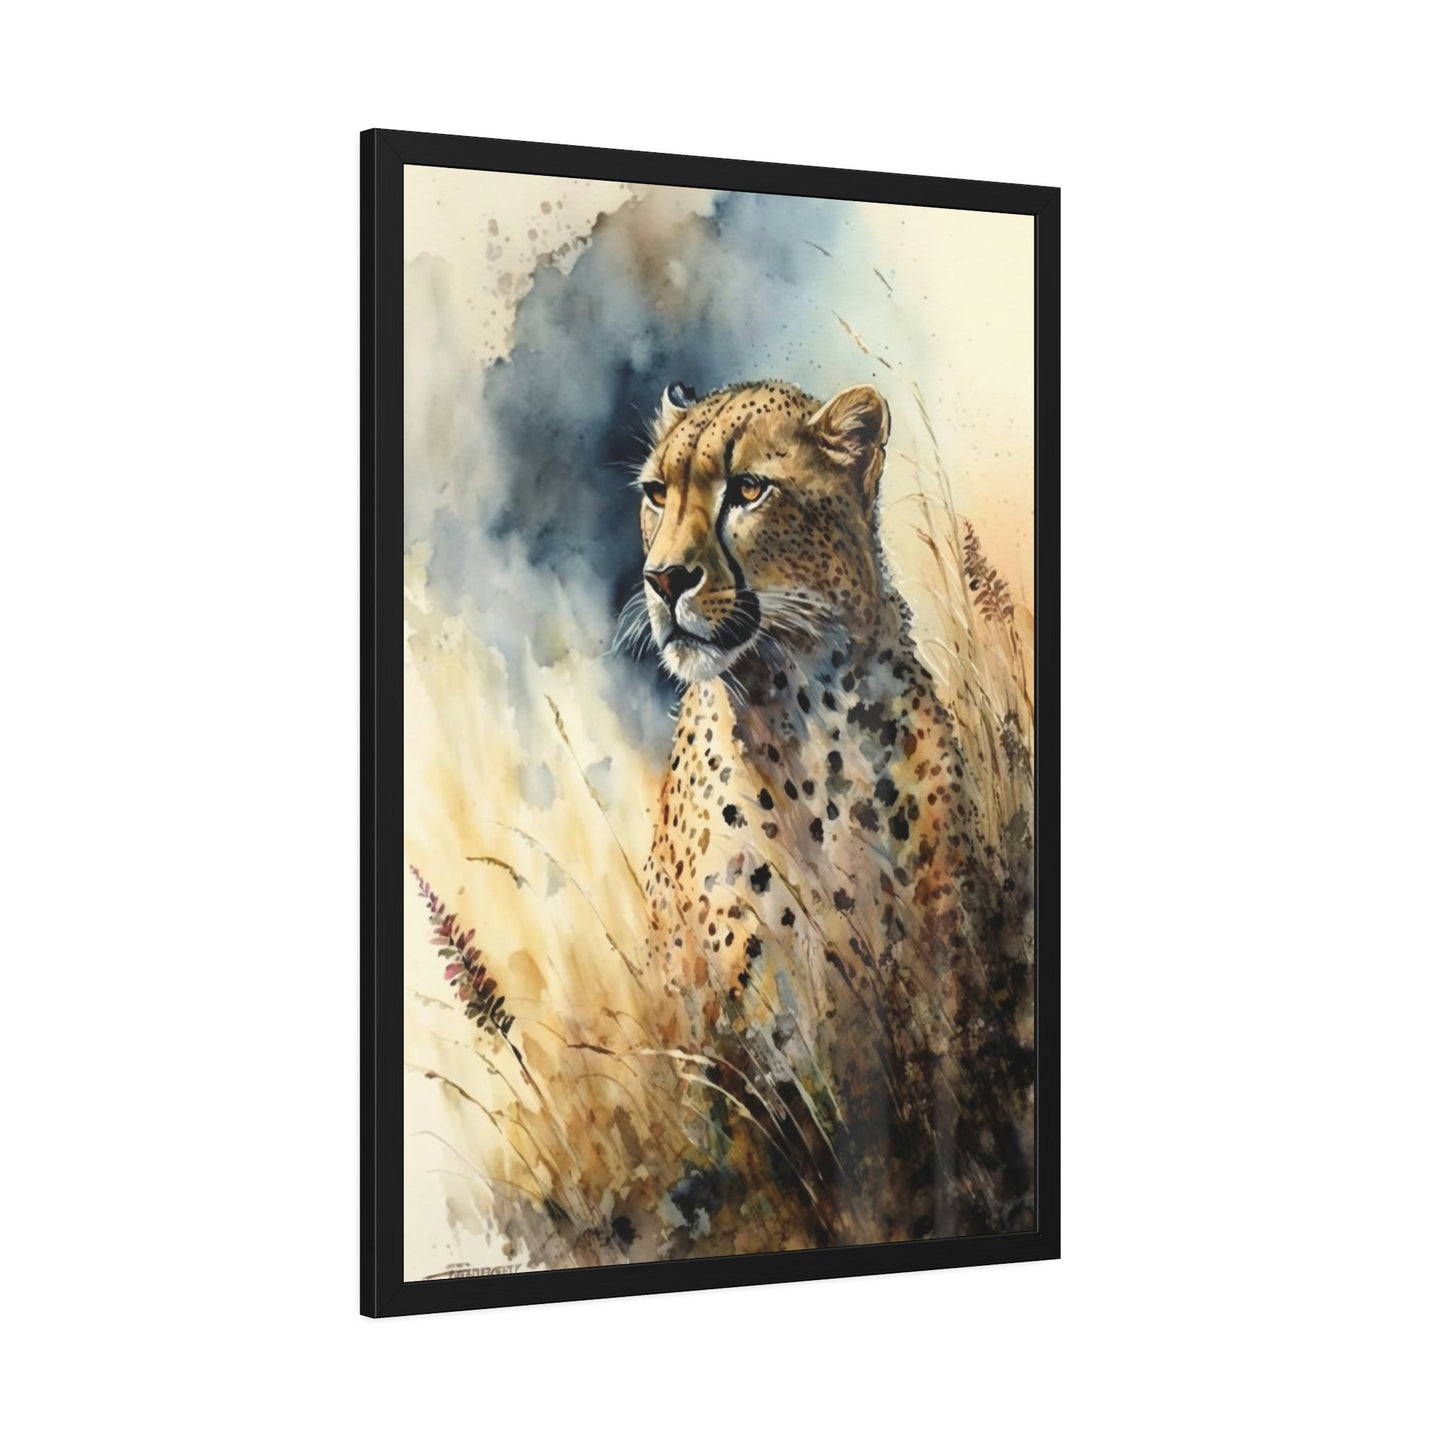 Graceful Movement: Cheetahs on Stunning Wall Canvas